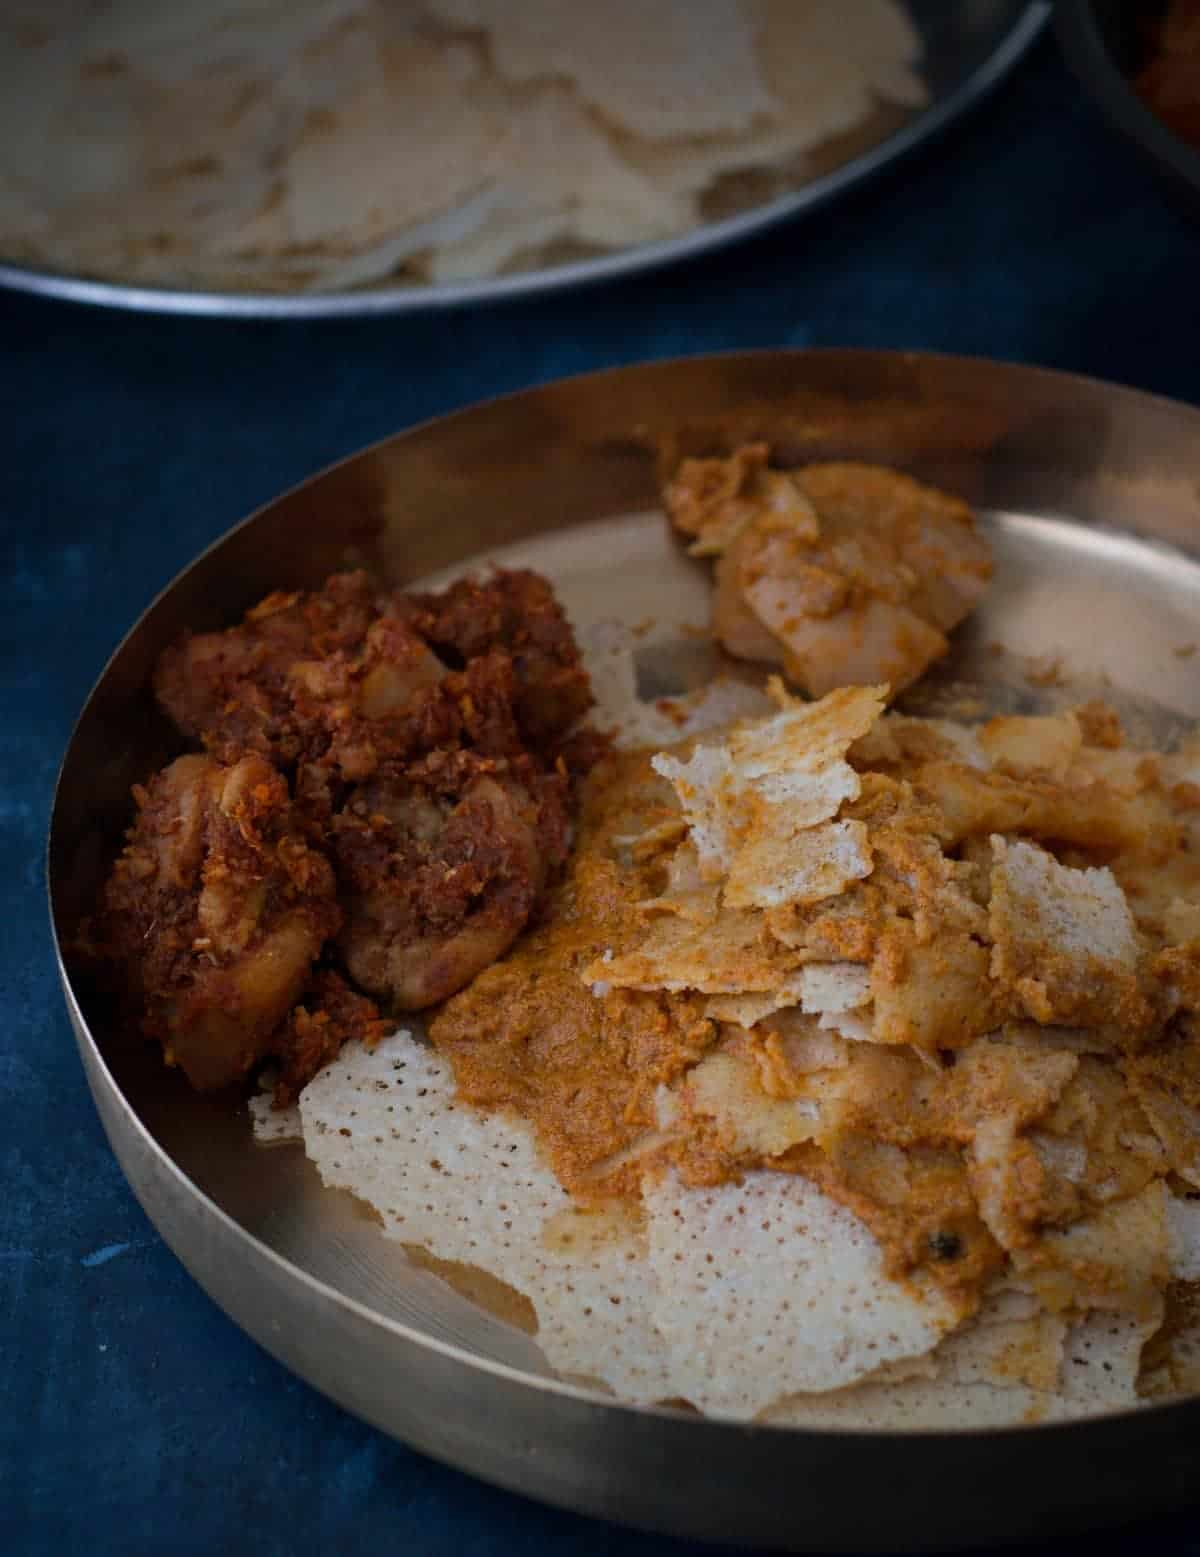 Kori rutti served with pieces of kori ajadina in a bronze plate